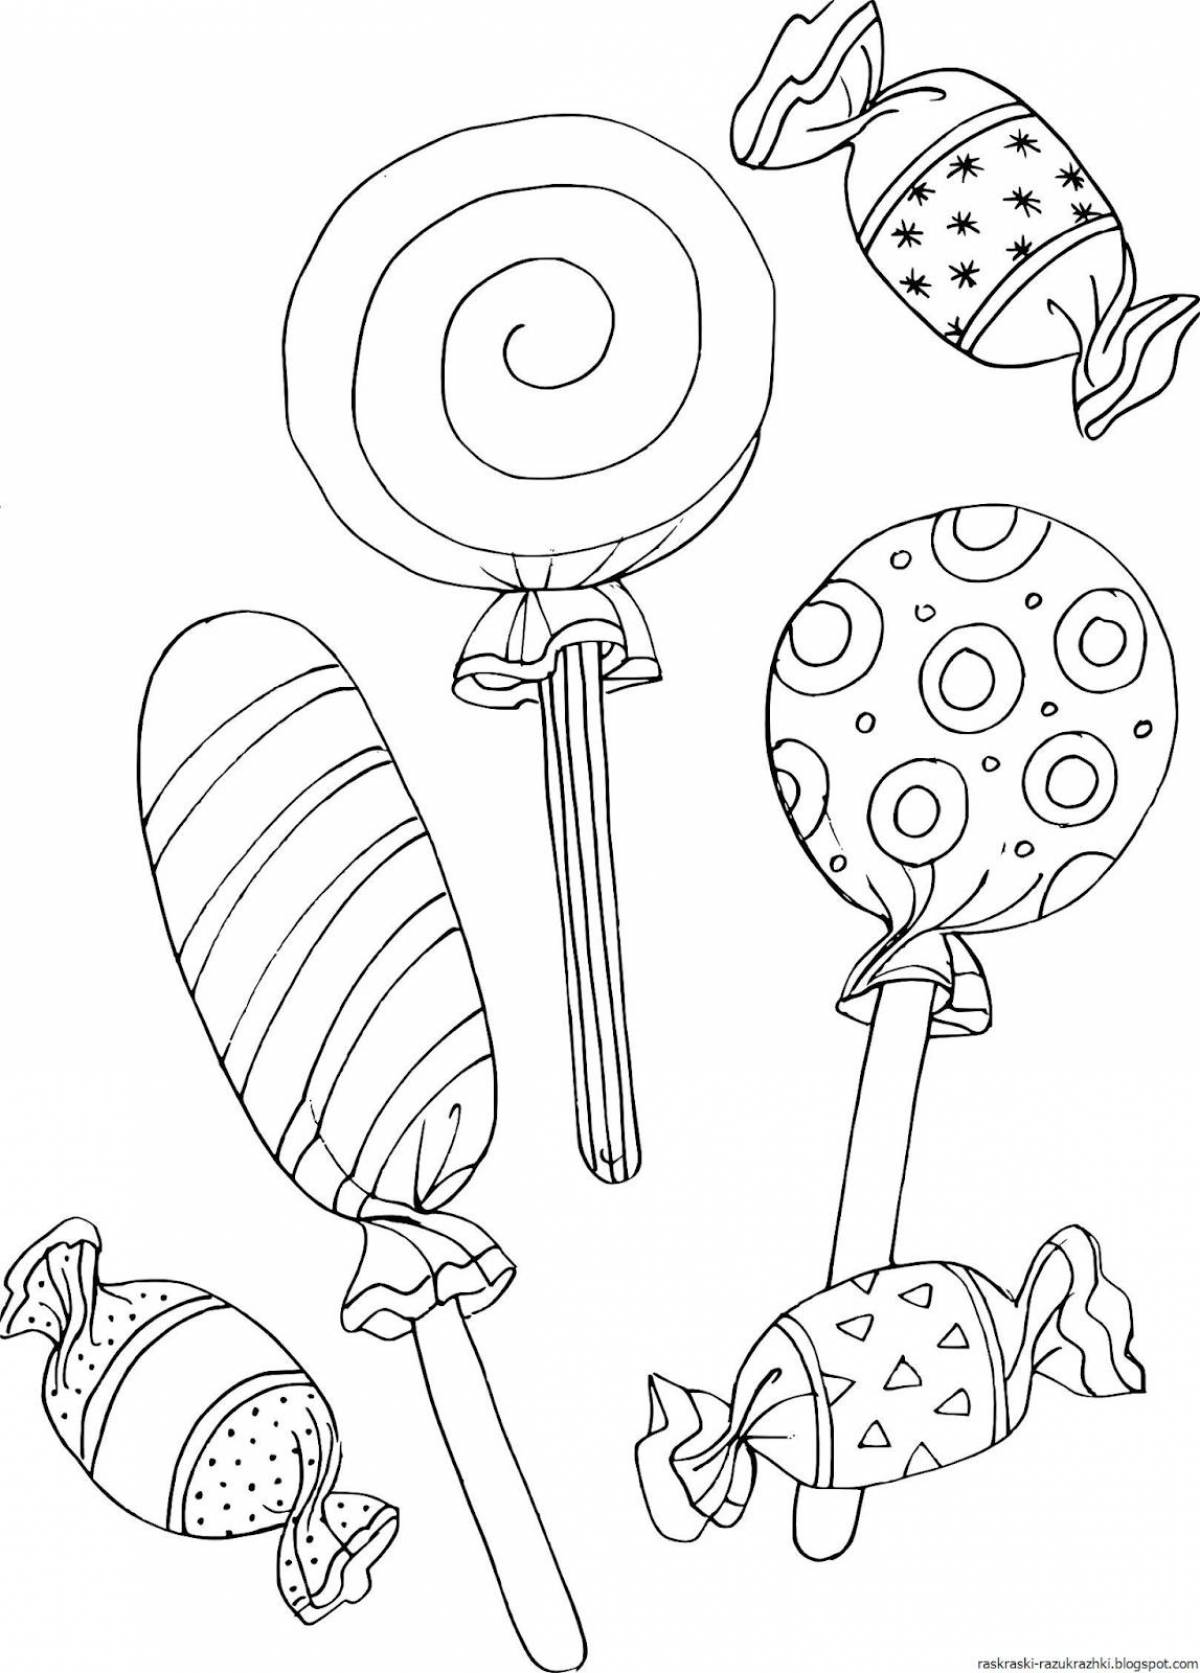 Playful lollipop coloring page